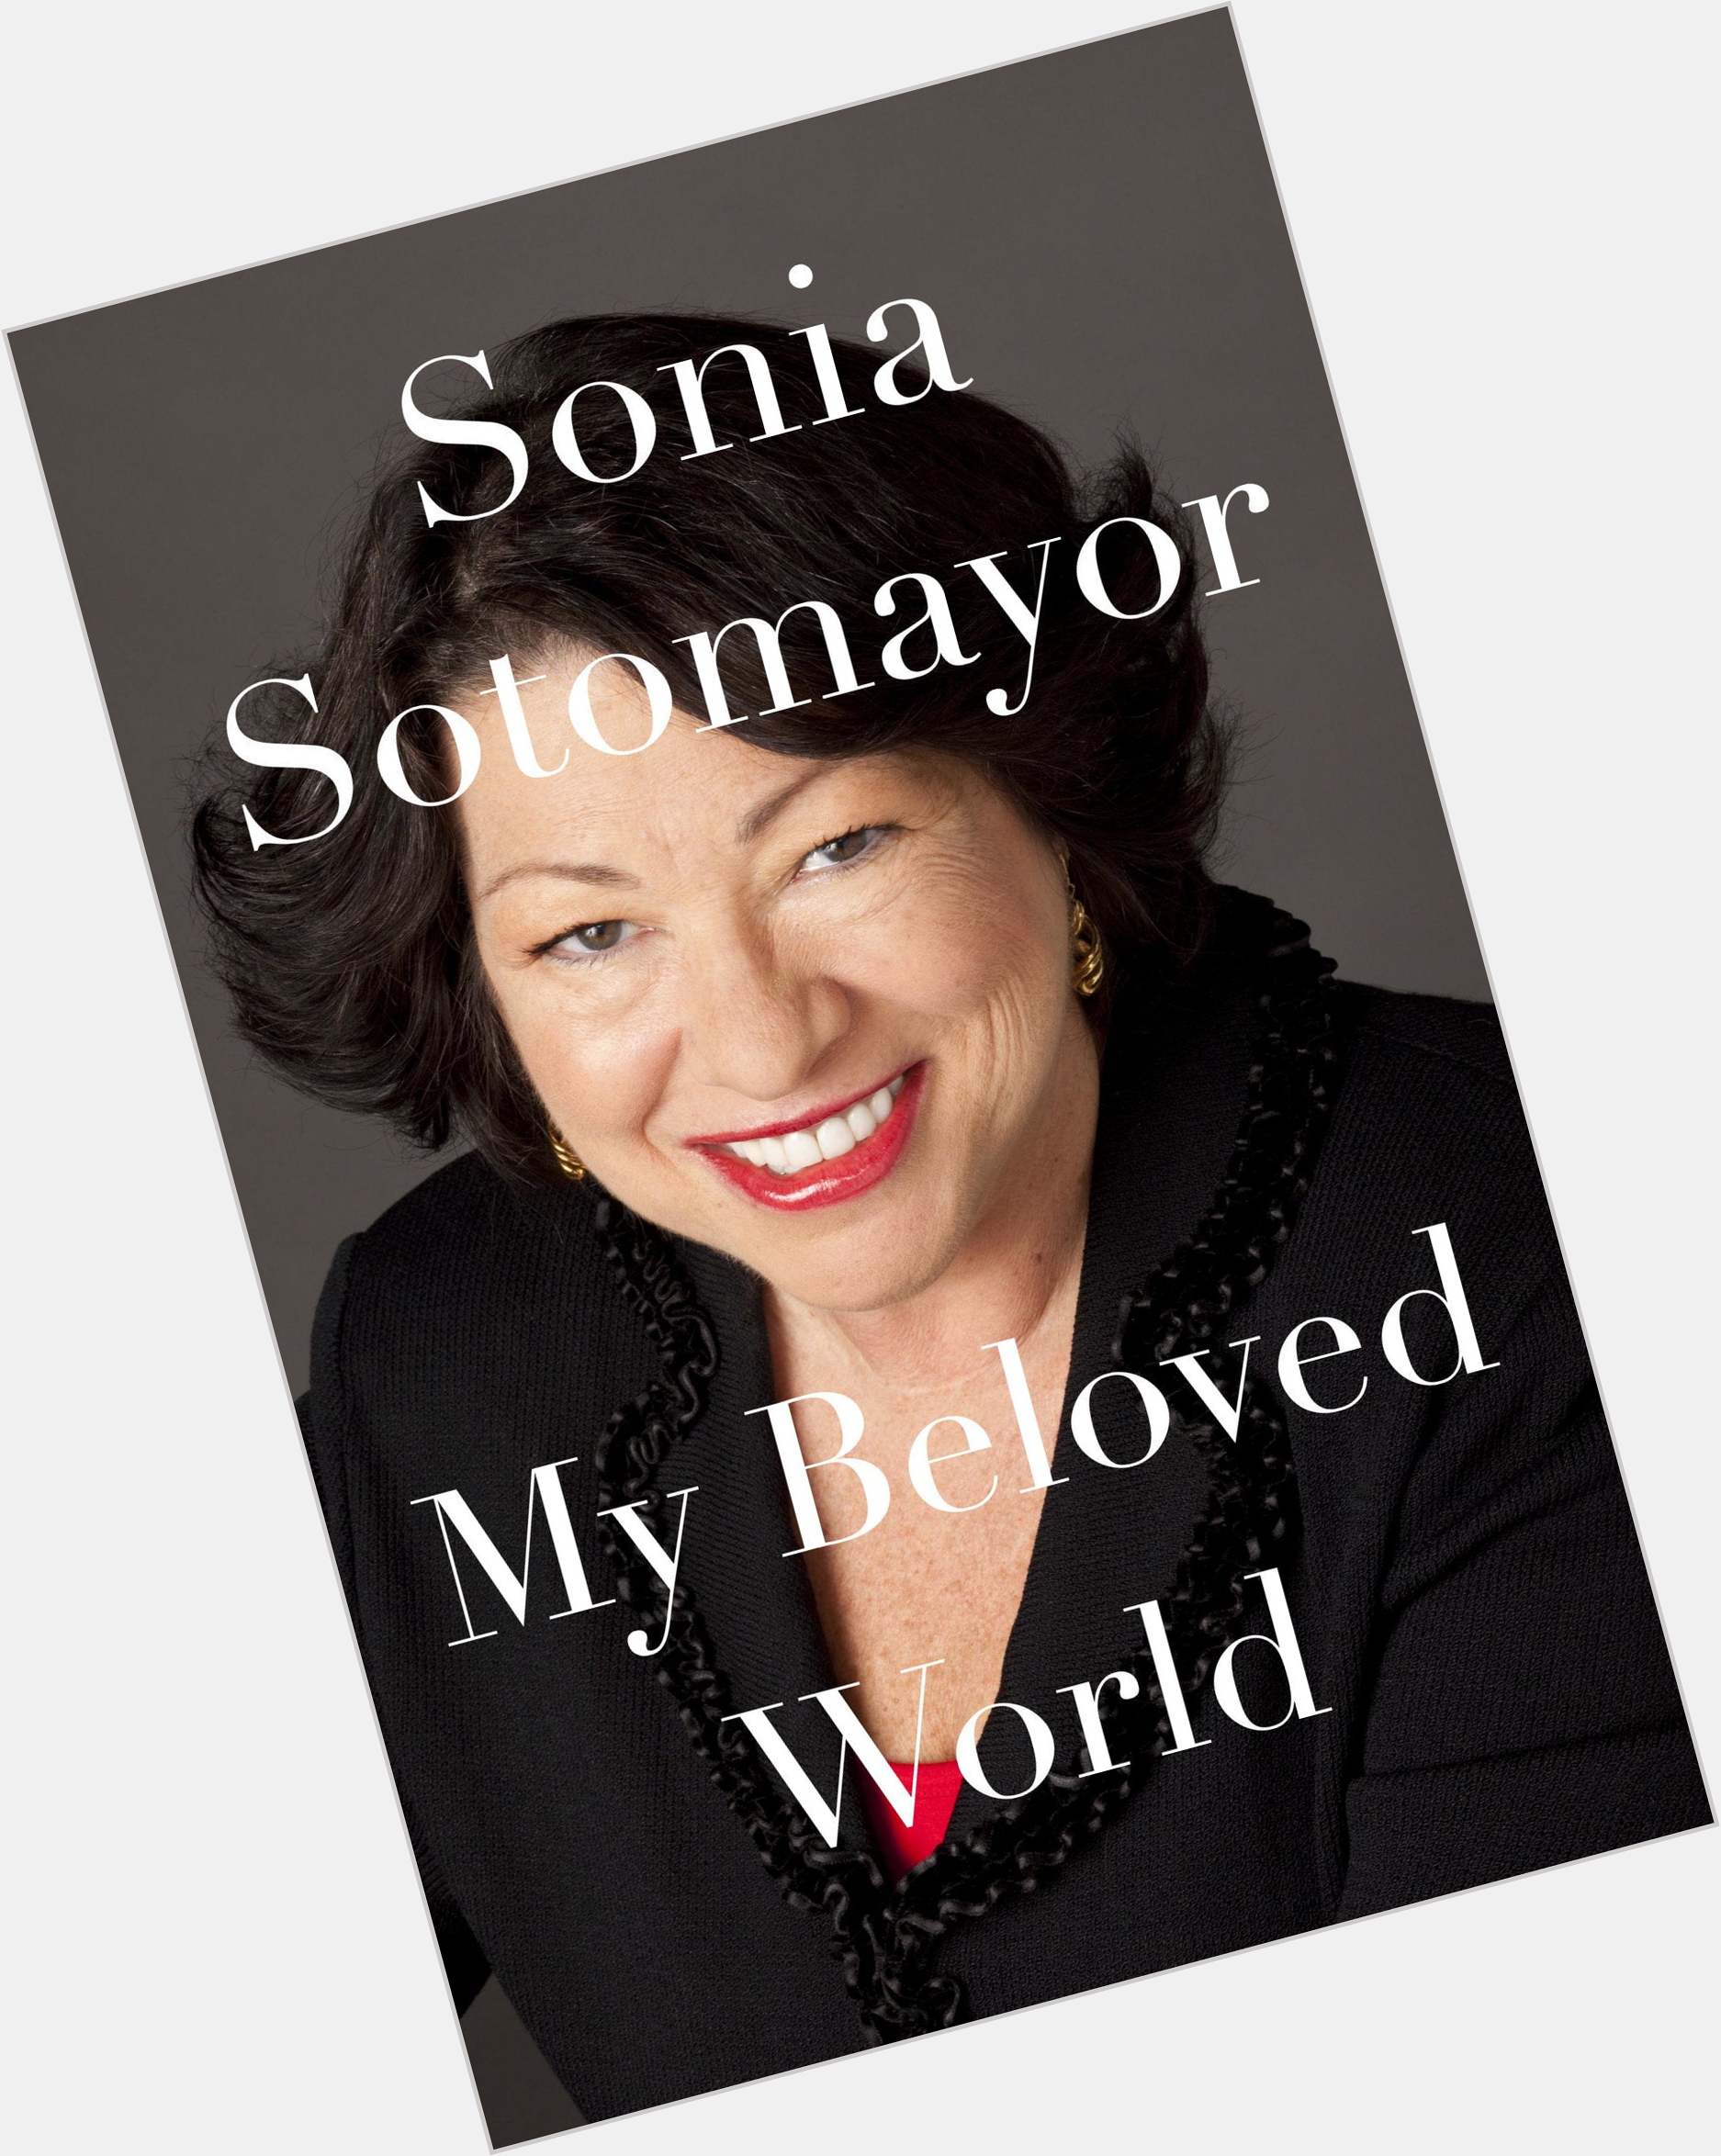 Sonia Sotomayor body 3